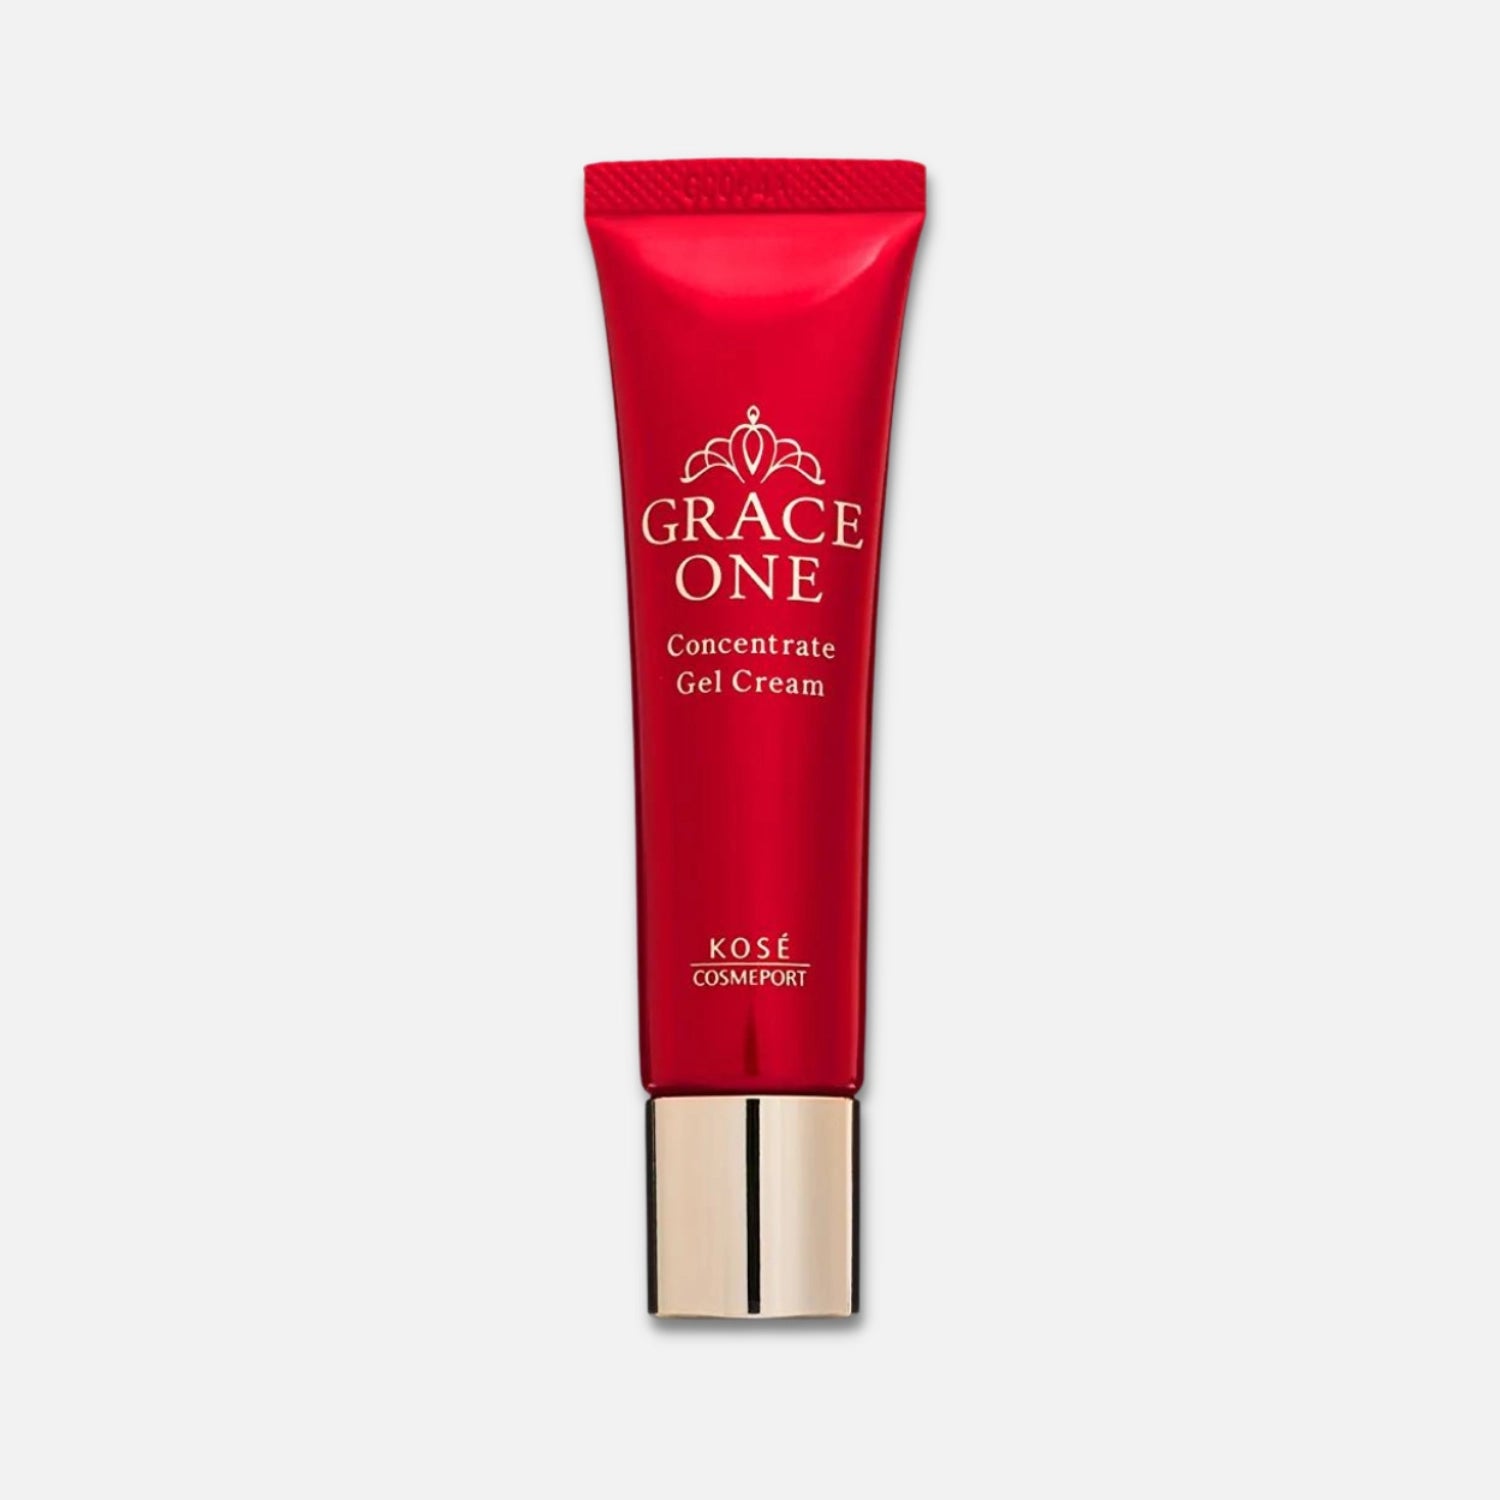 Kose Grace One Concentrate Gel Cream 30g - Buy Me Japan